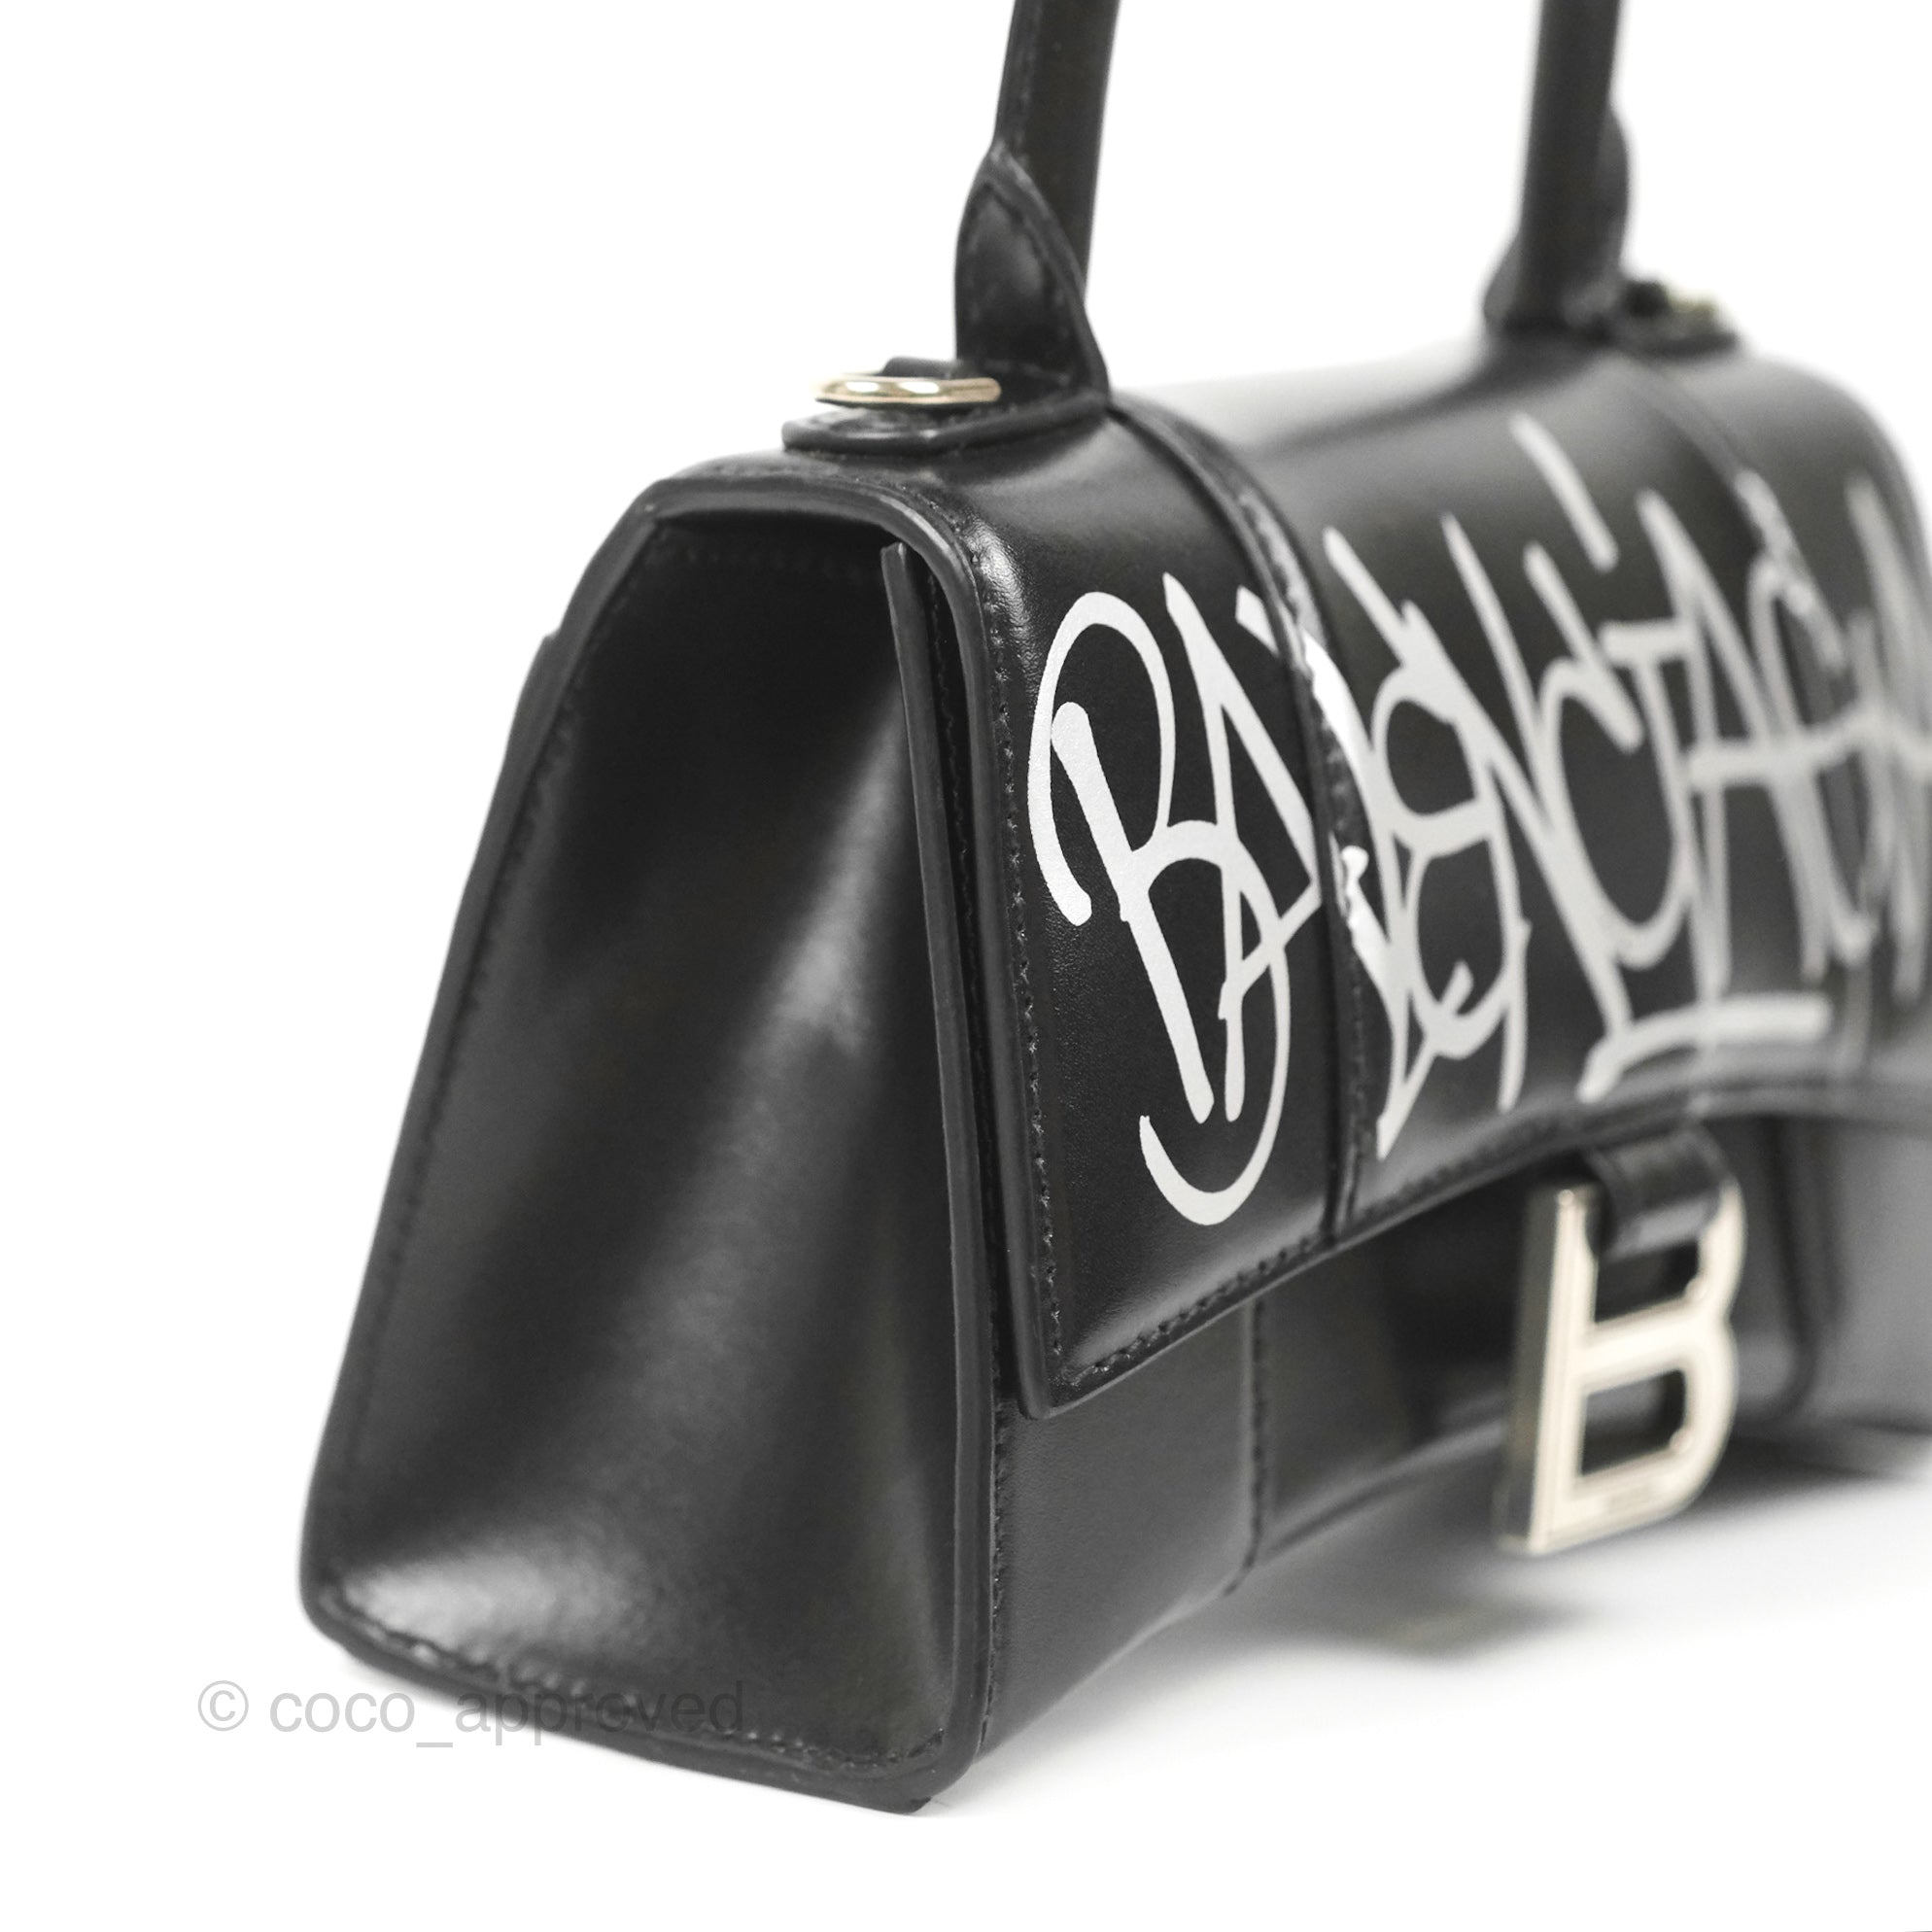 Balenciaga Hourglass Graffiti Small Leather Top Handle Bag